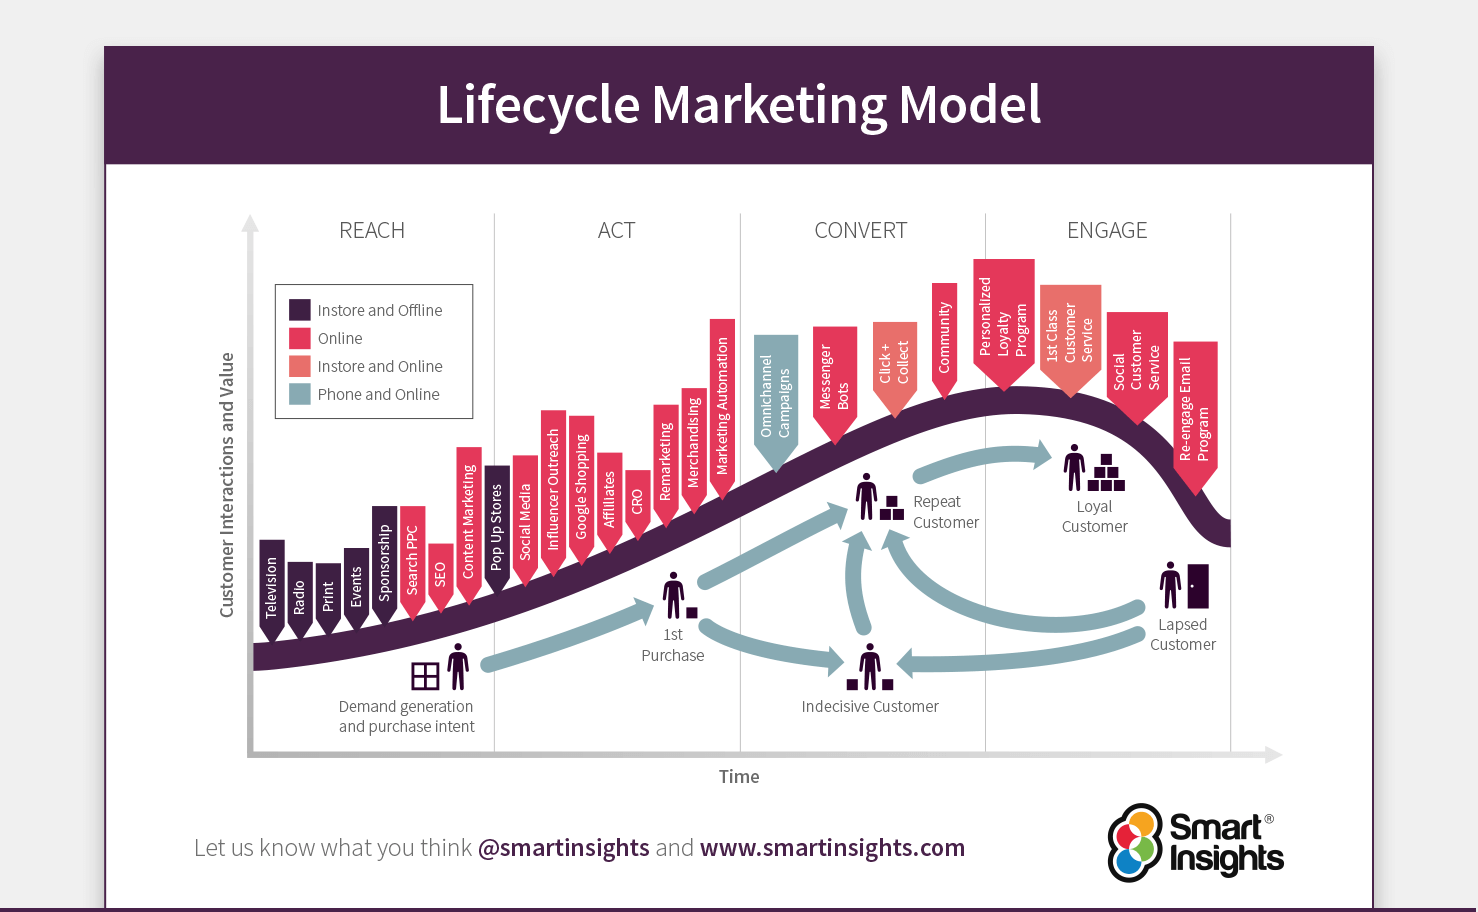 RACE lifecycle marketing model diagram